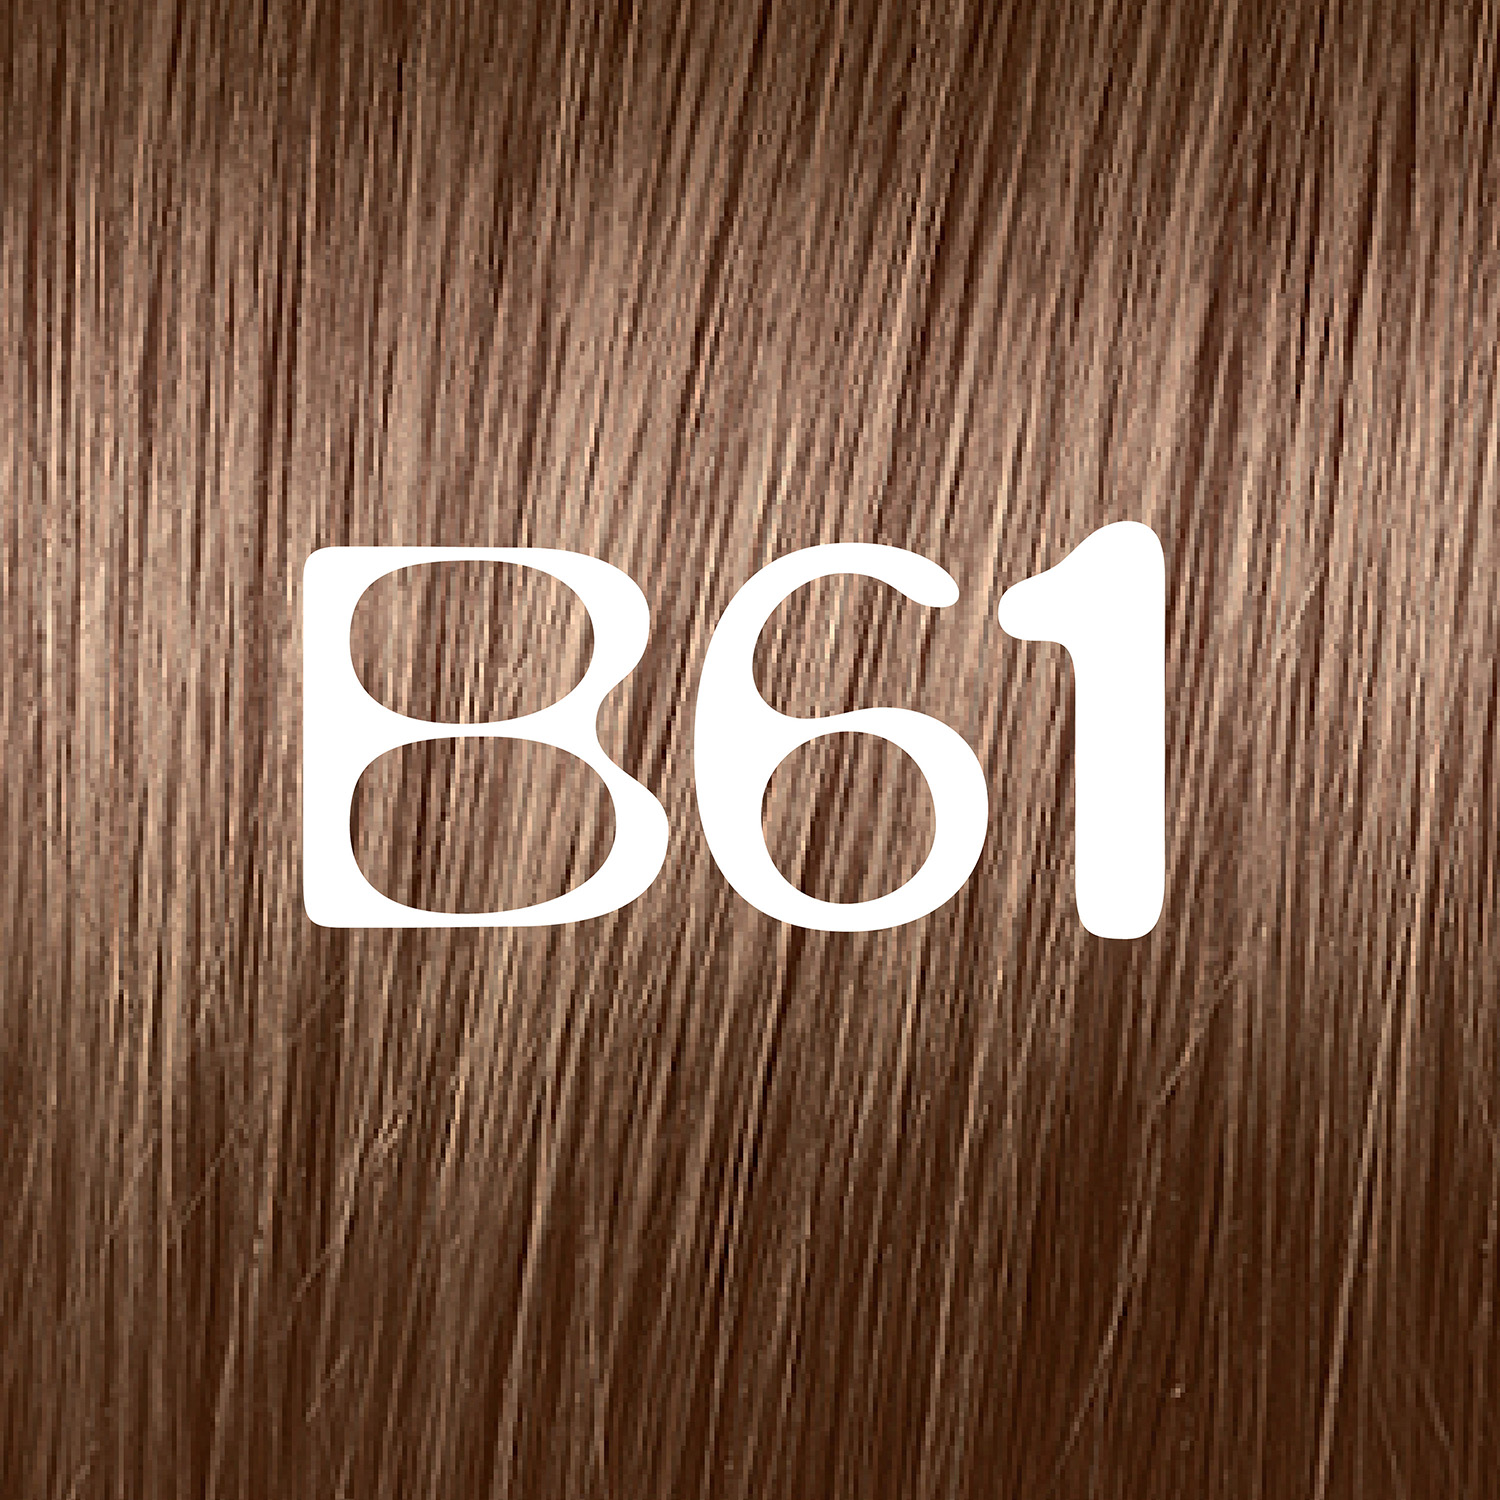 L'Oreal Paris Feria Permanent Hair Color, B61 Downtown Brown Hi Lift Cool Brown - image 2 of 8